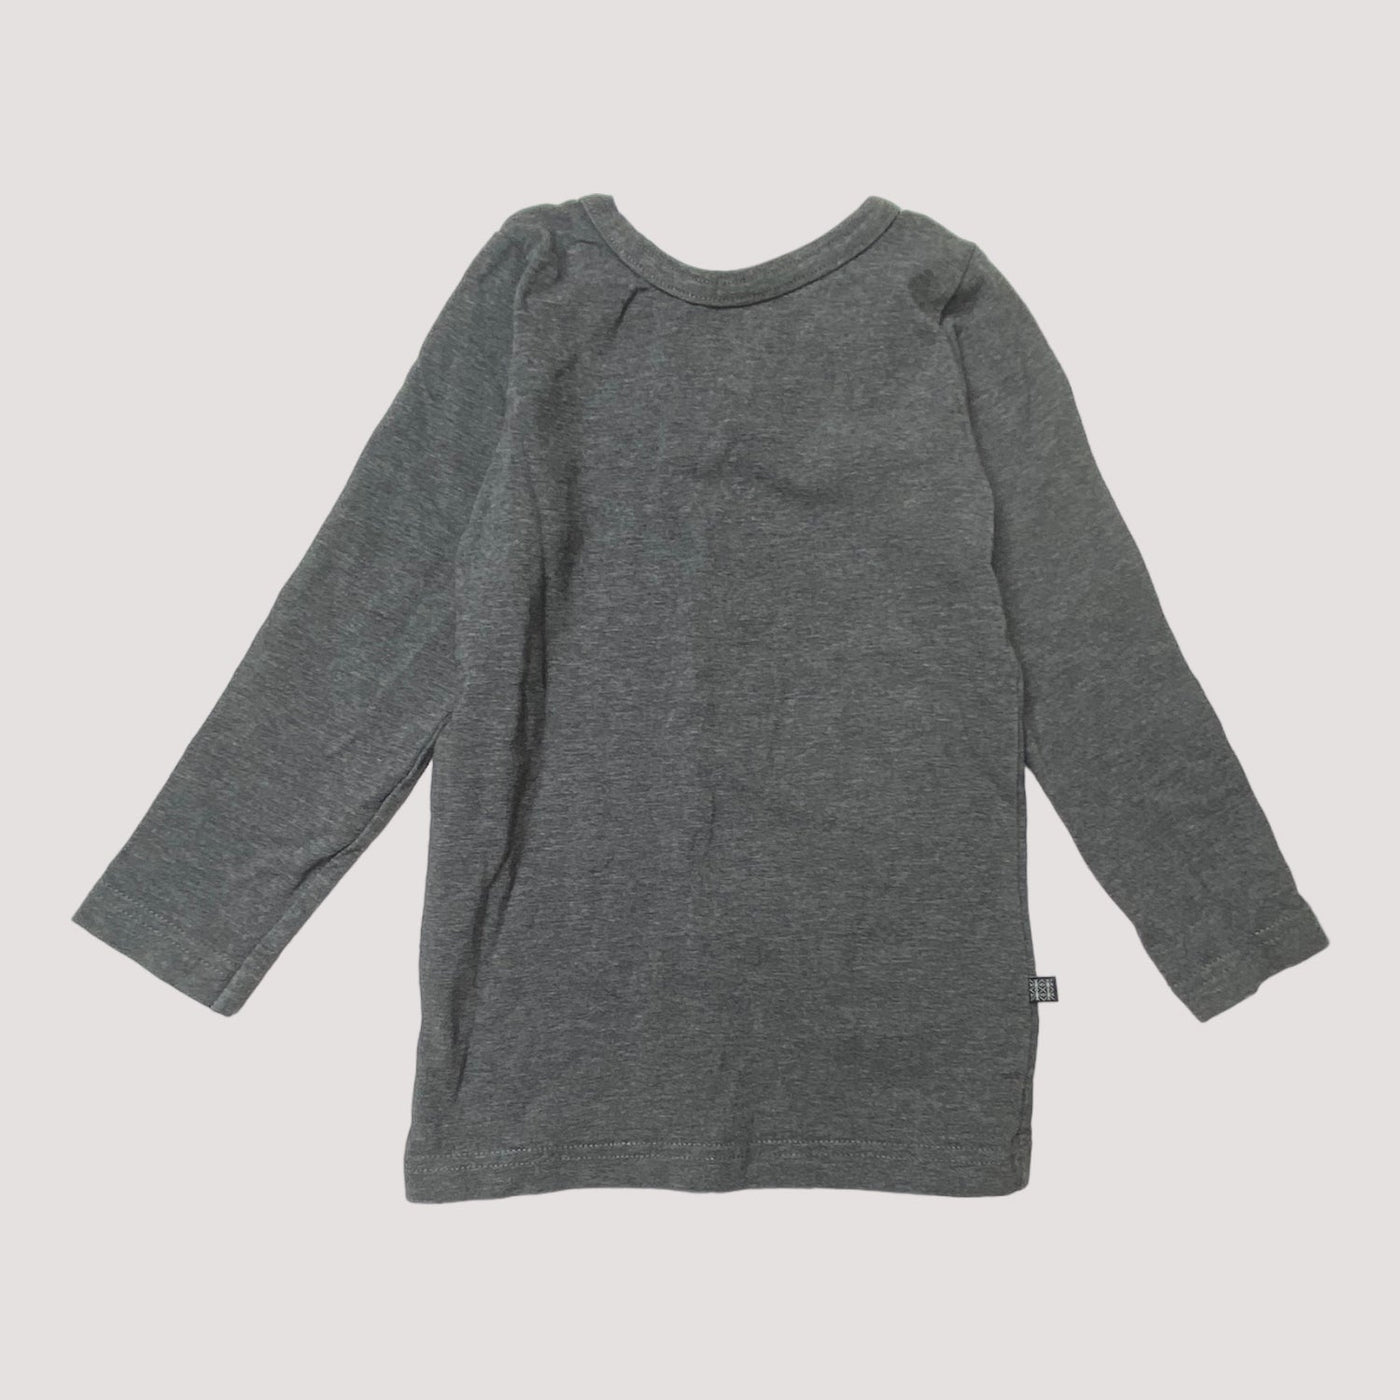 Kaiko cross shirt, grey | 86/92cm